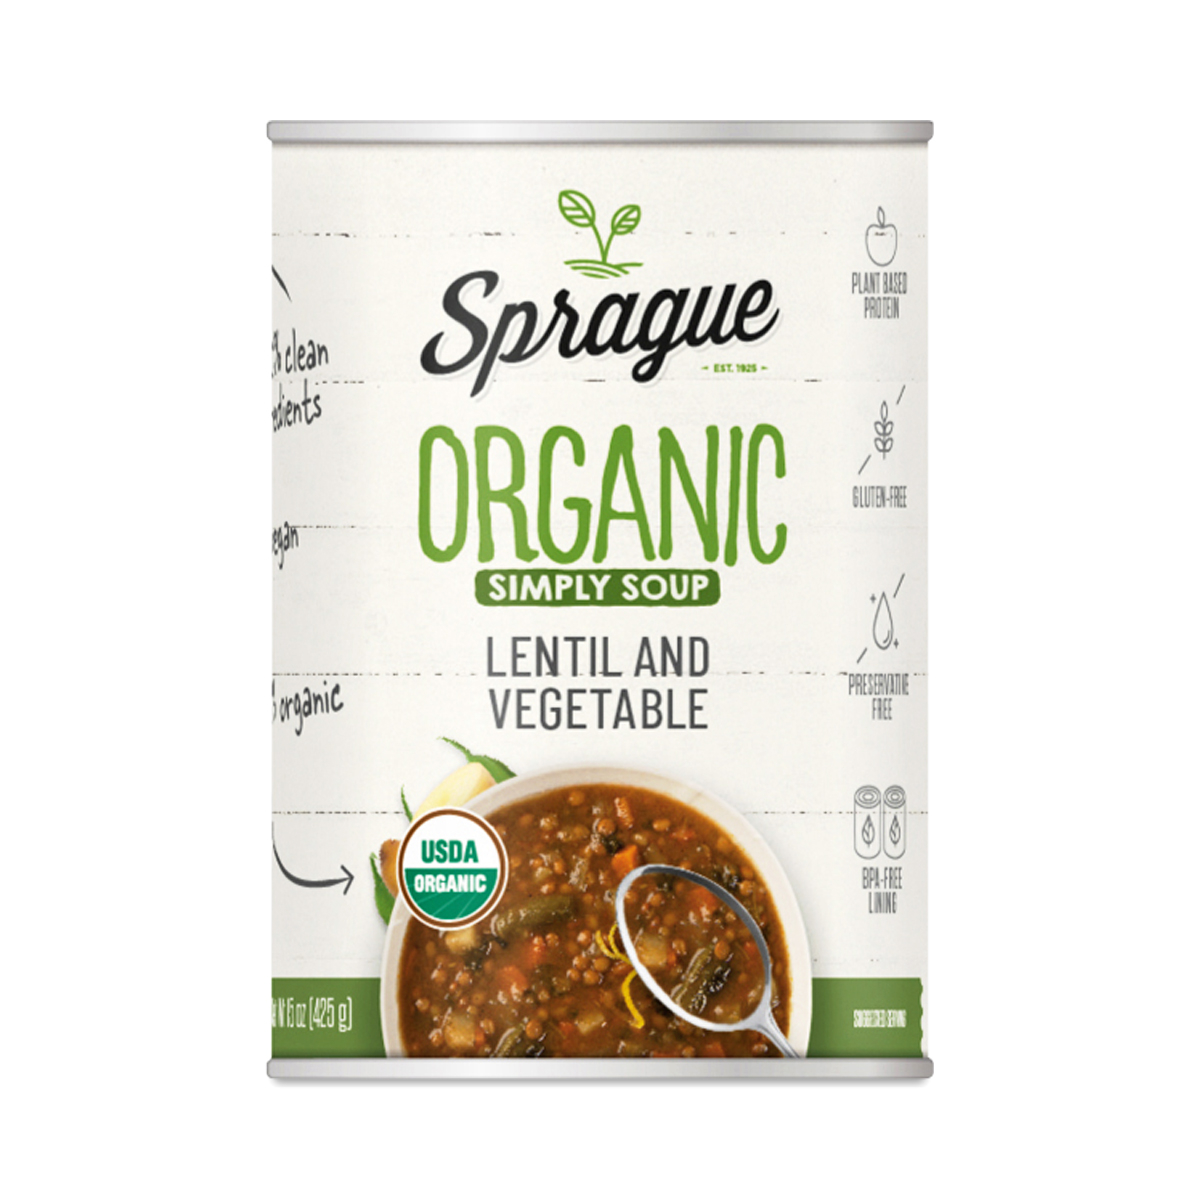 Sprague Organic Lentil Soup with Vegetables 15 oz can